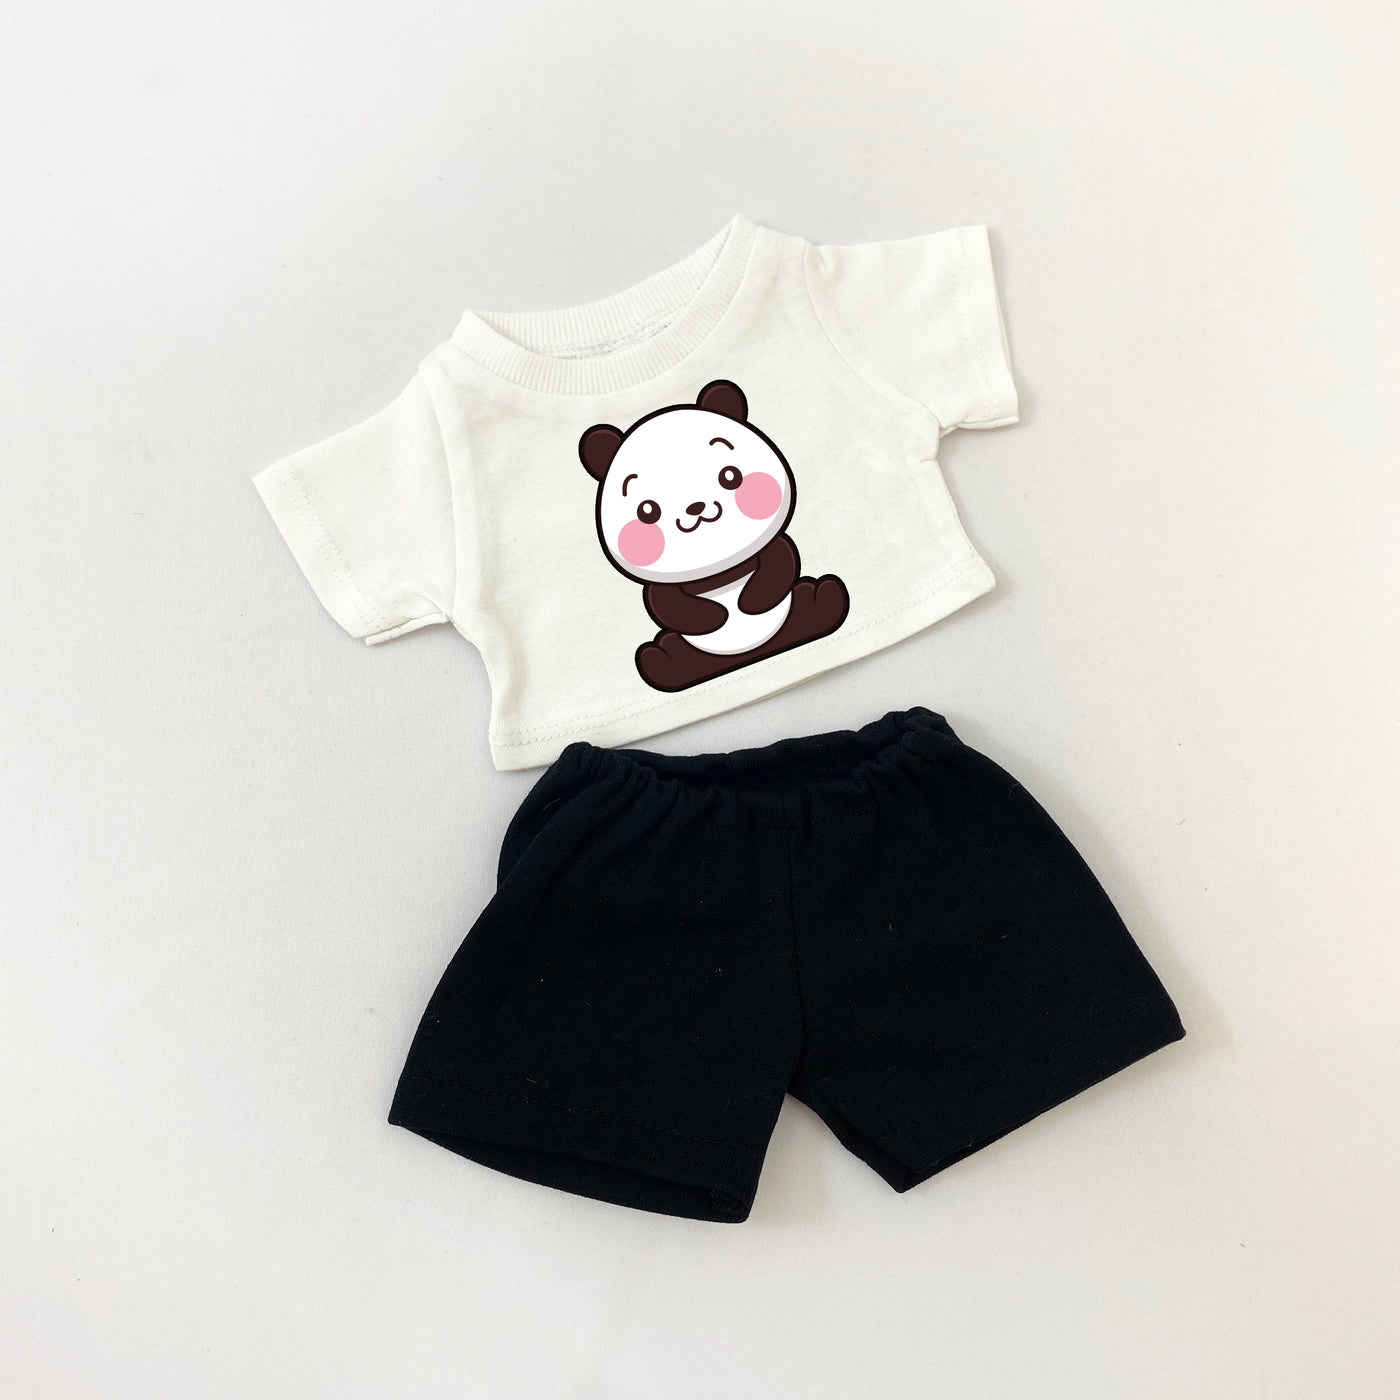 Rag Doll Outfit - Panda